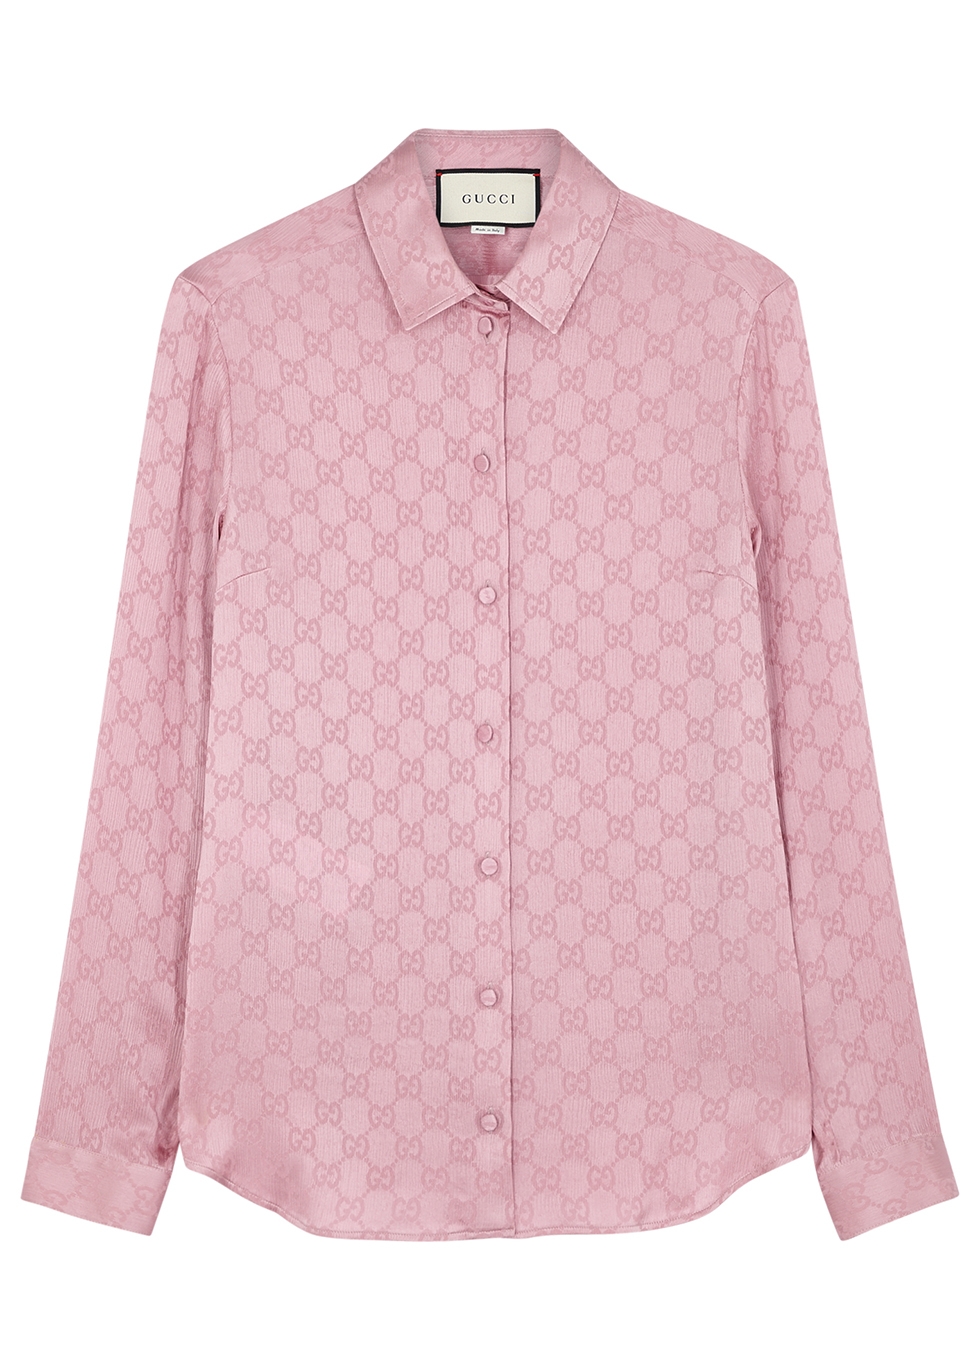 gucci pink blouse